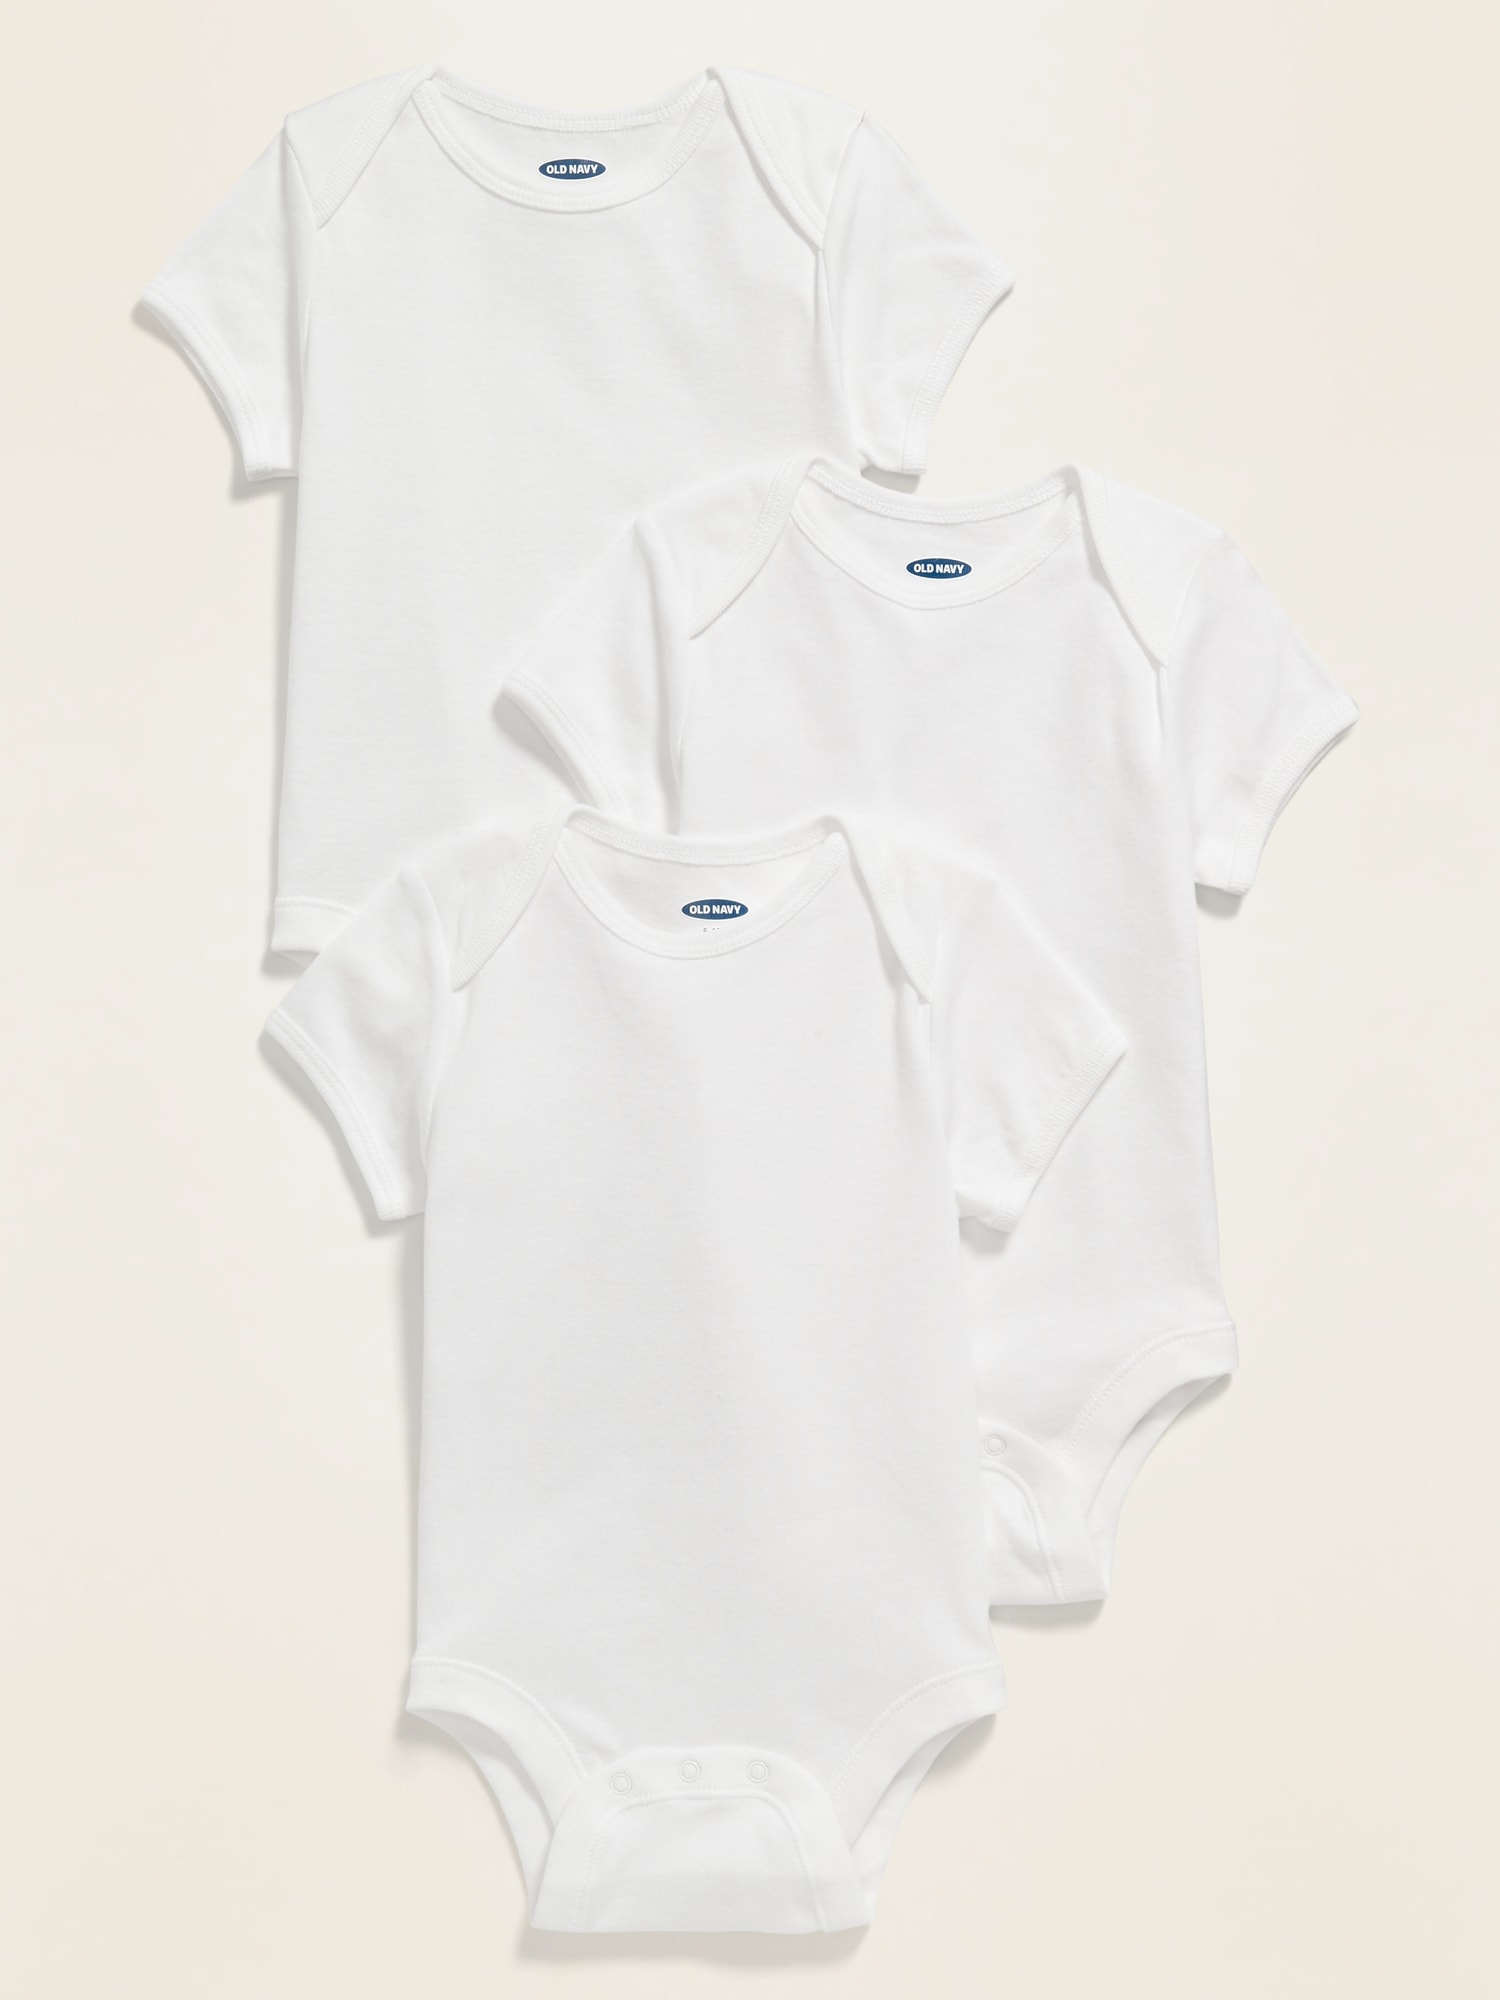 Unisex Short-Sleeve Jersey Bodysuit 3-Pack for Baby | Old Navy